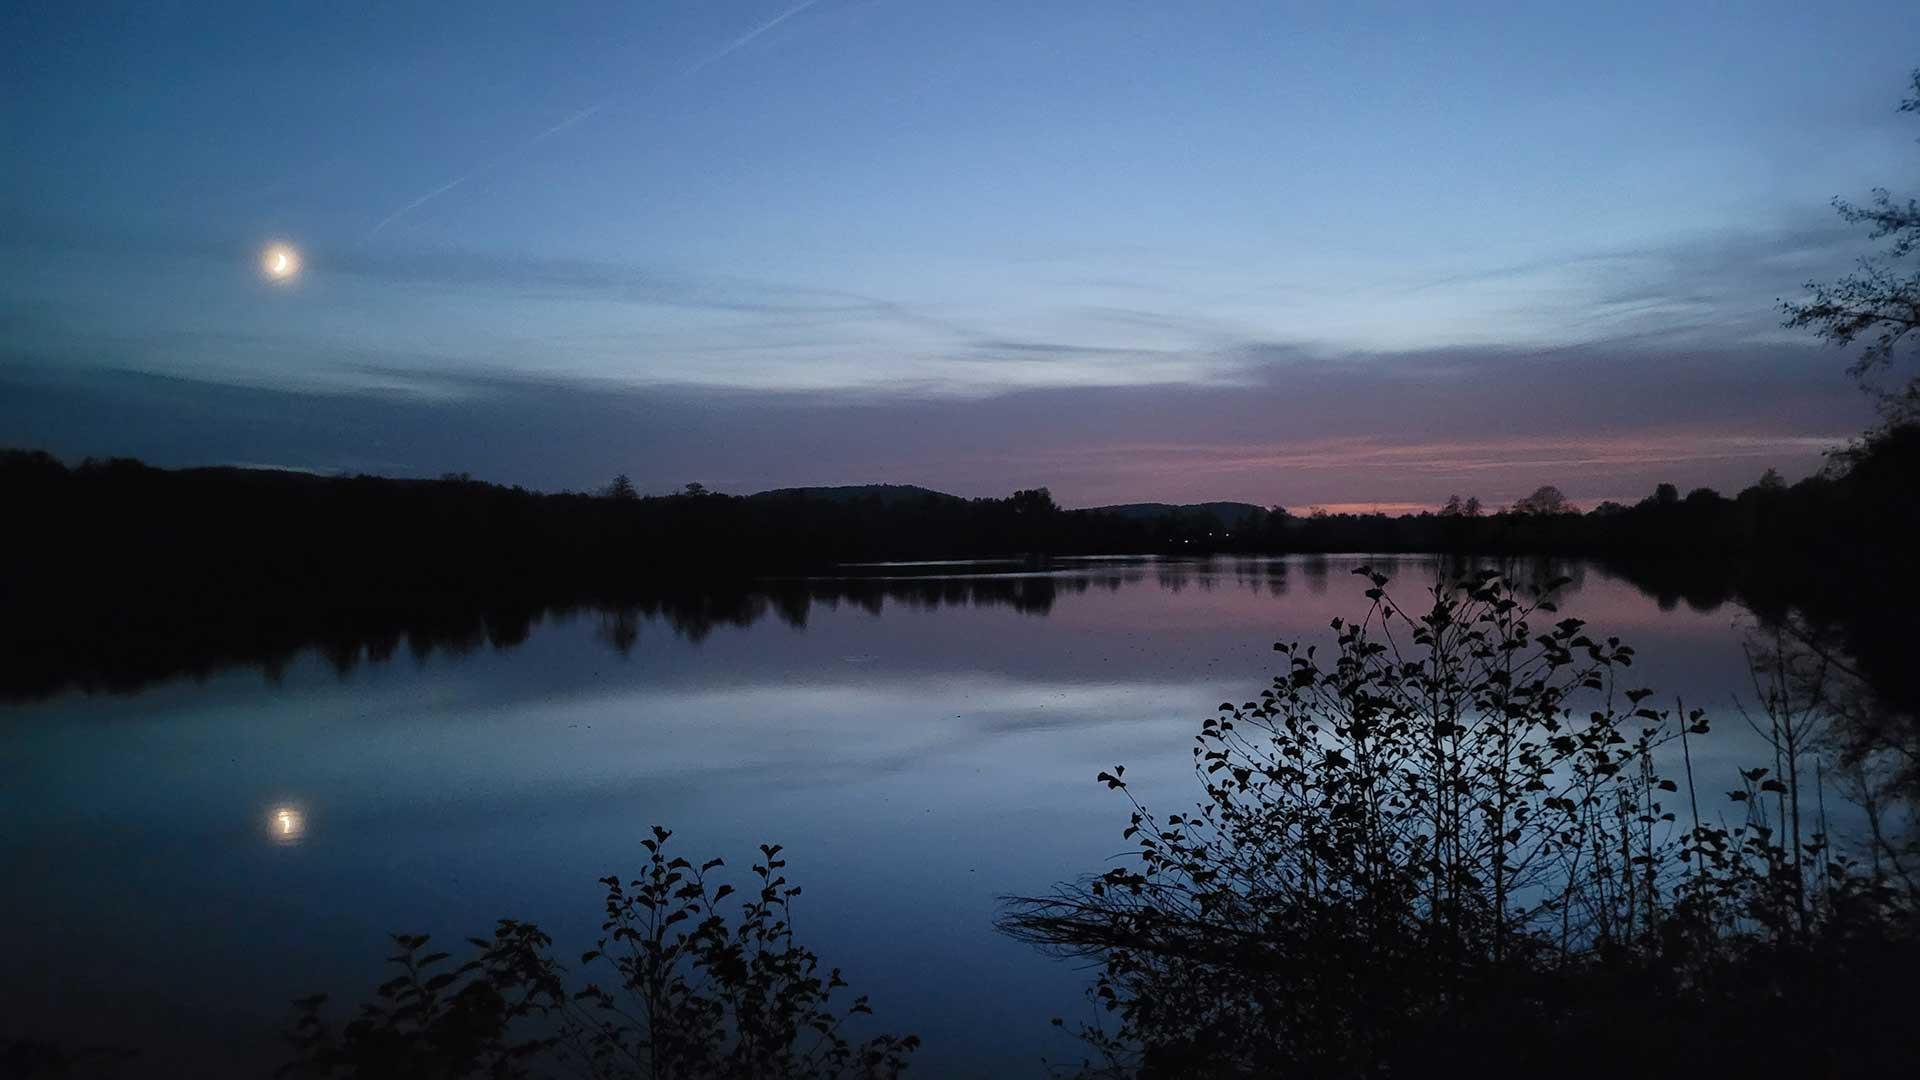 The Ballastières lake in Haute-Saône in the evening